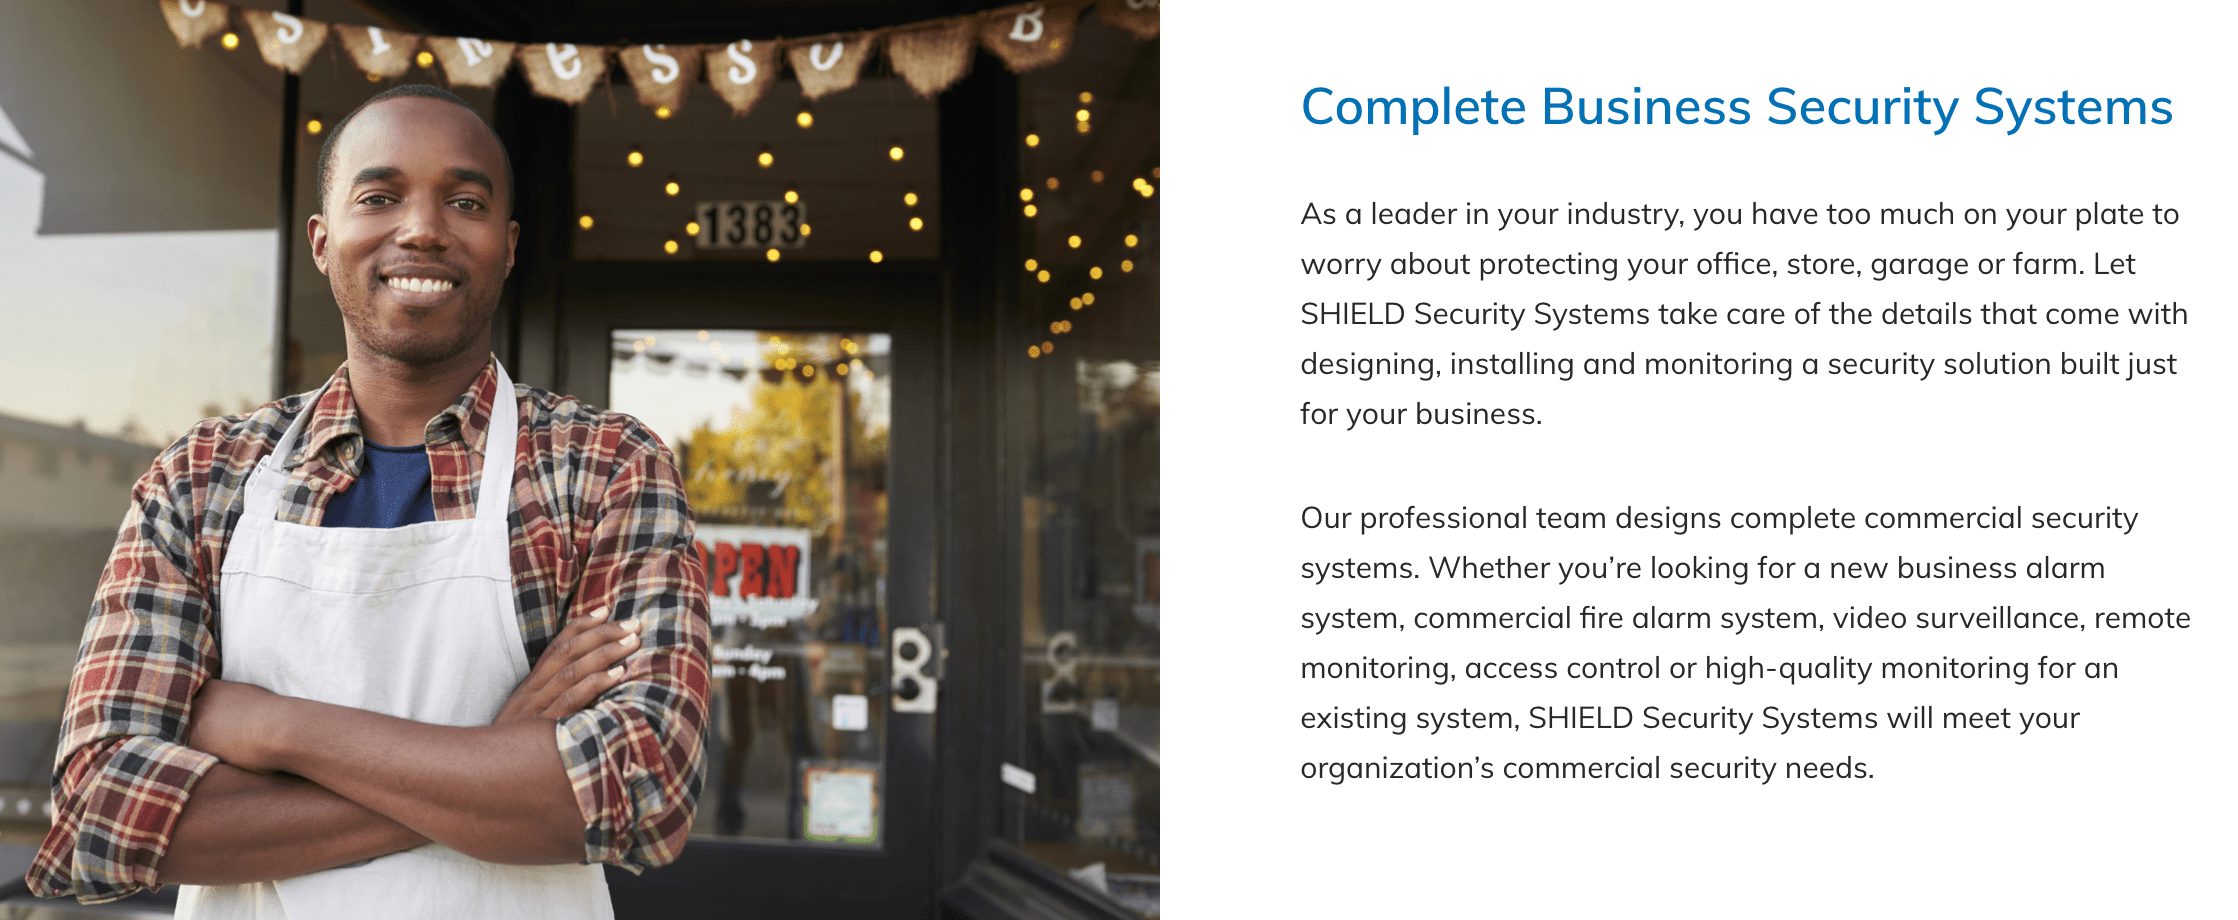 Shield Security business security description.